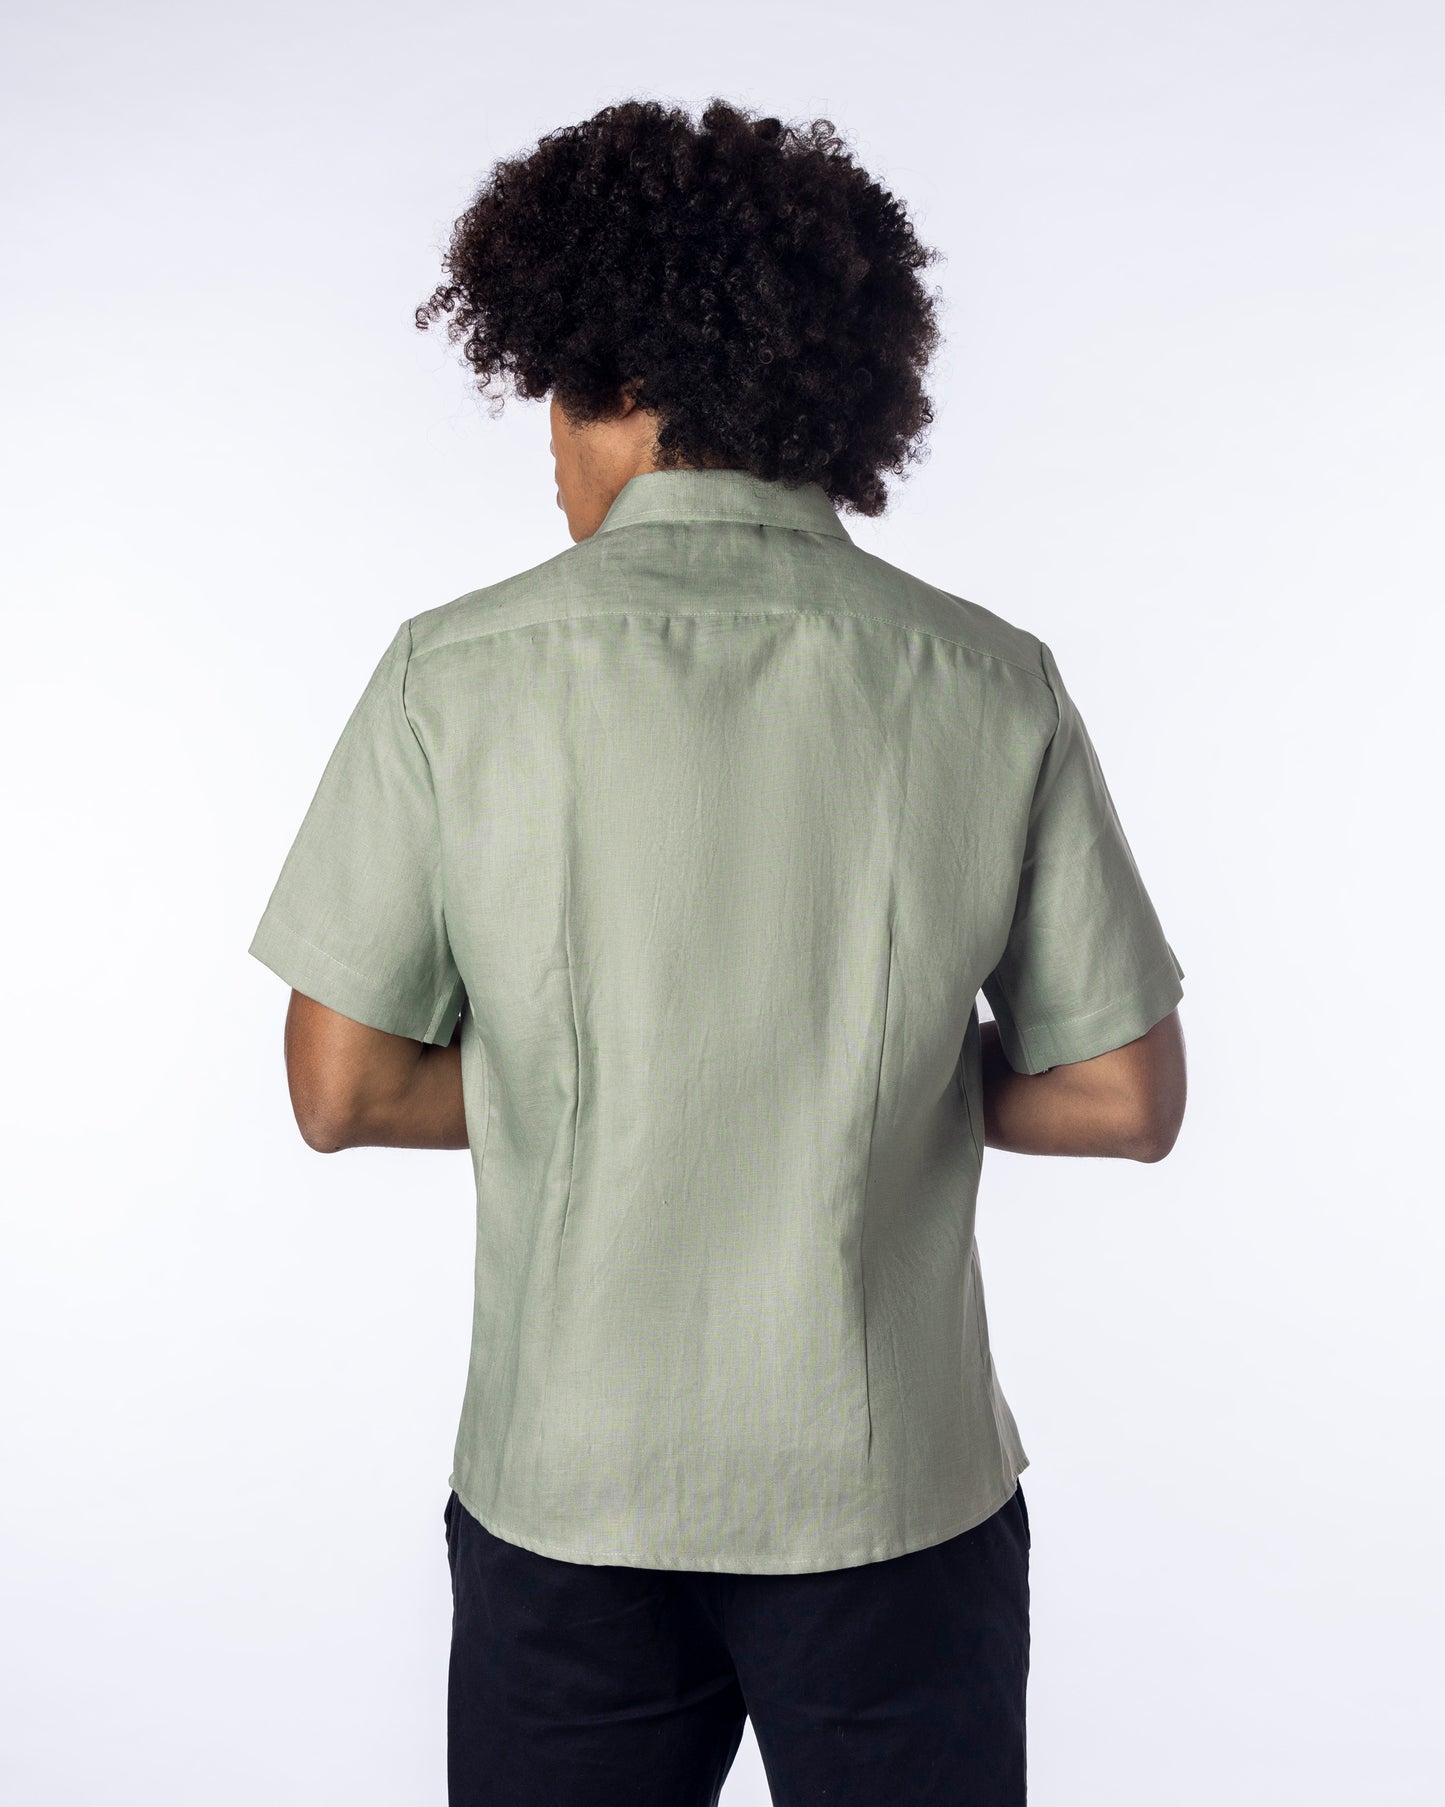 khaki back image Linen Shirt for Men short sleeve button up